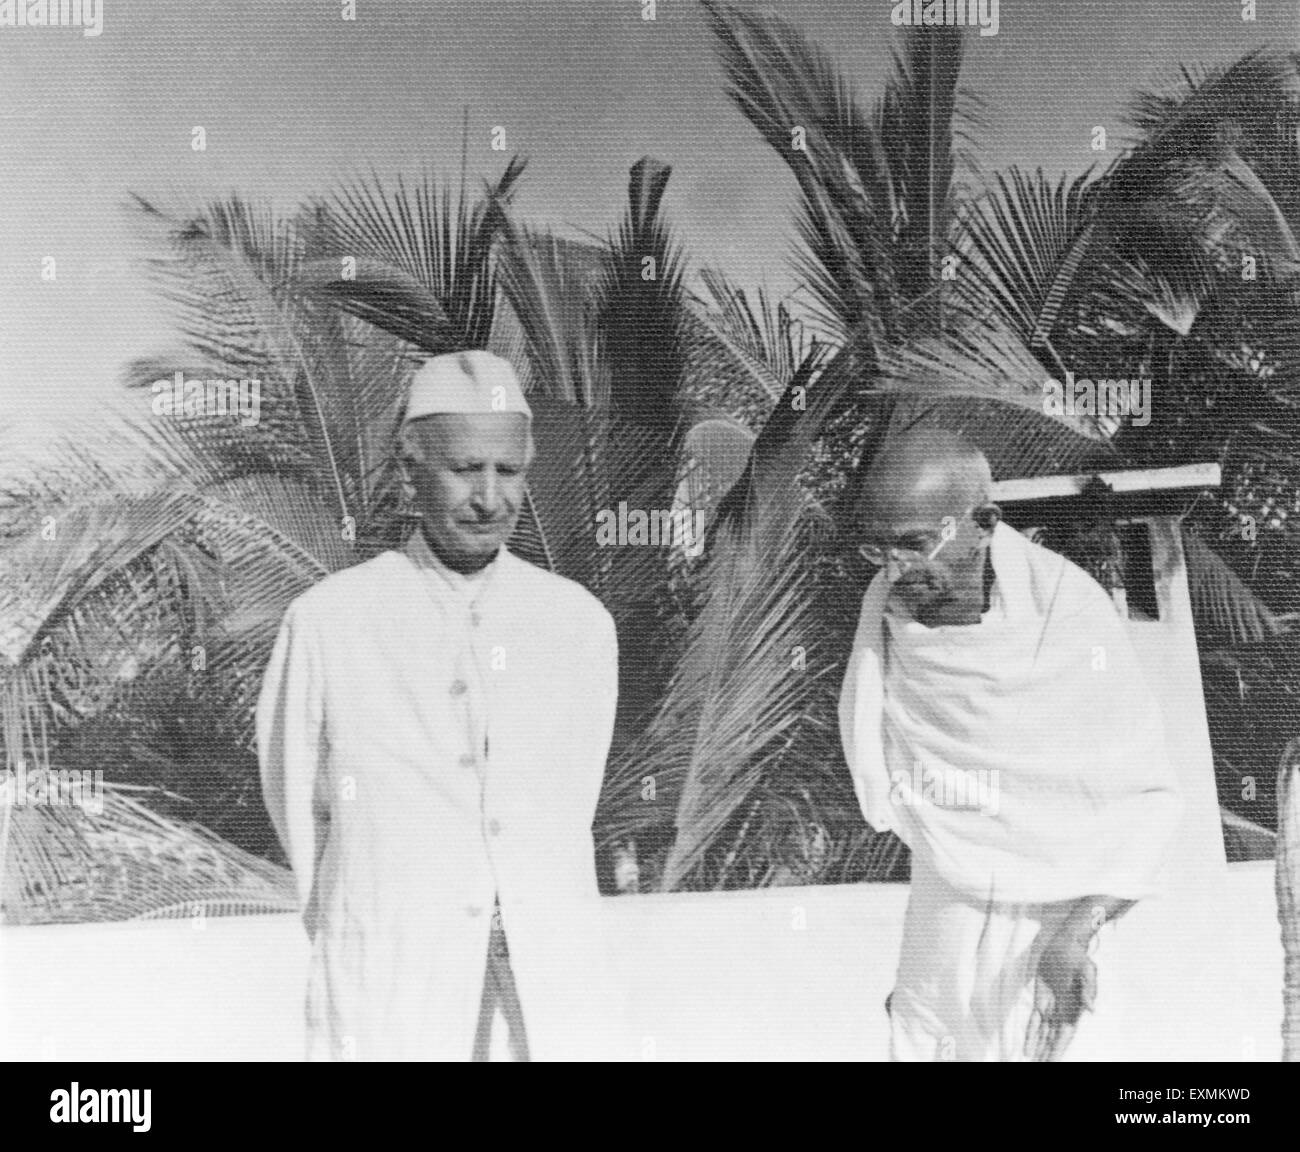 Mahatma Gandhi, Indien, Asien, alter Jahrgang 1900s Bild Stockfoto